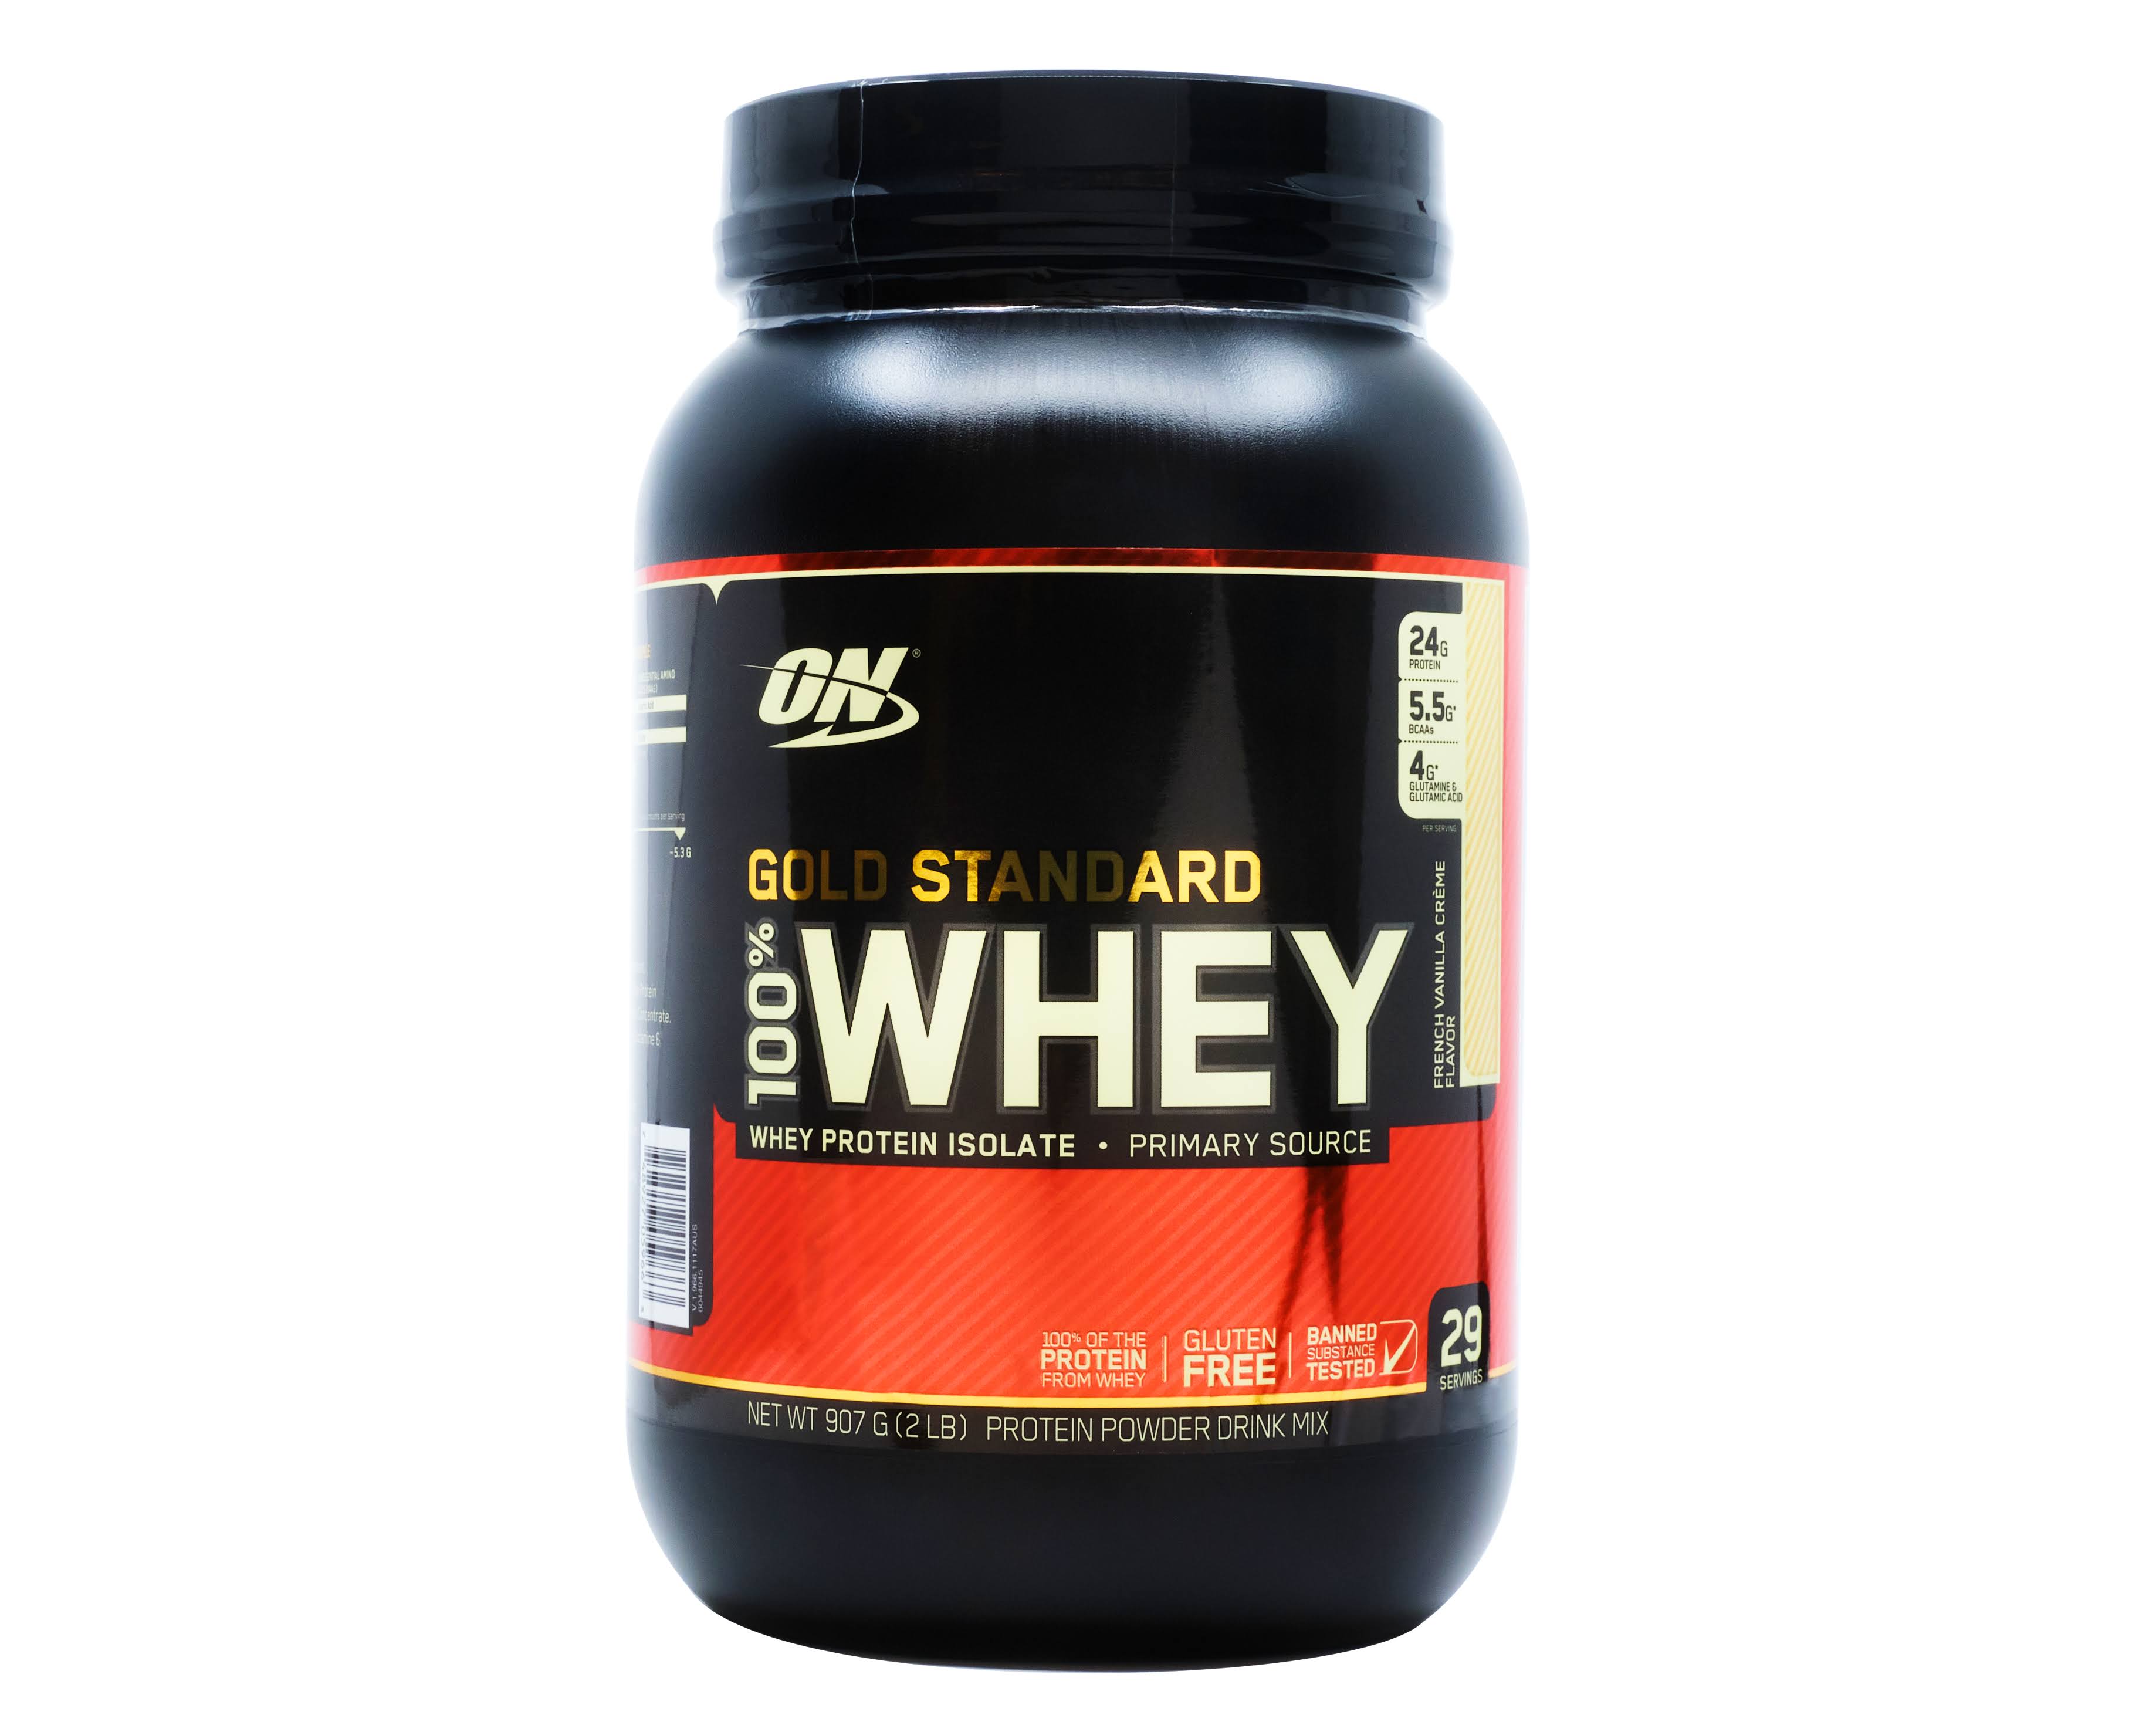 Optimum Nutrition Whey Gold Standard Sports Supplement - 2lbs, Milk Chocolate